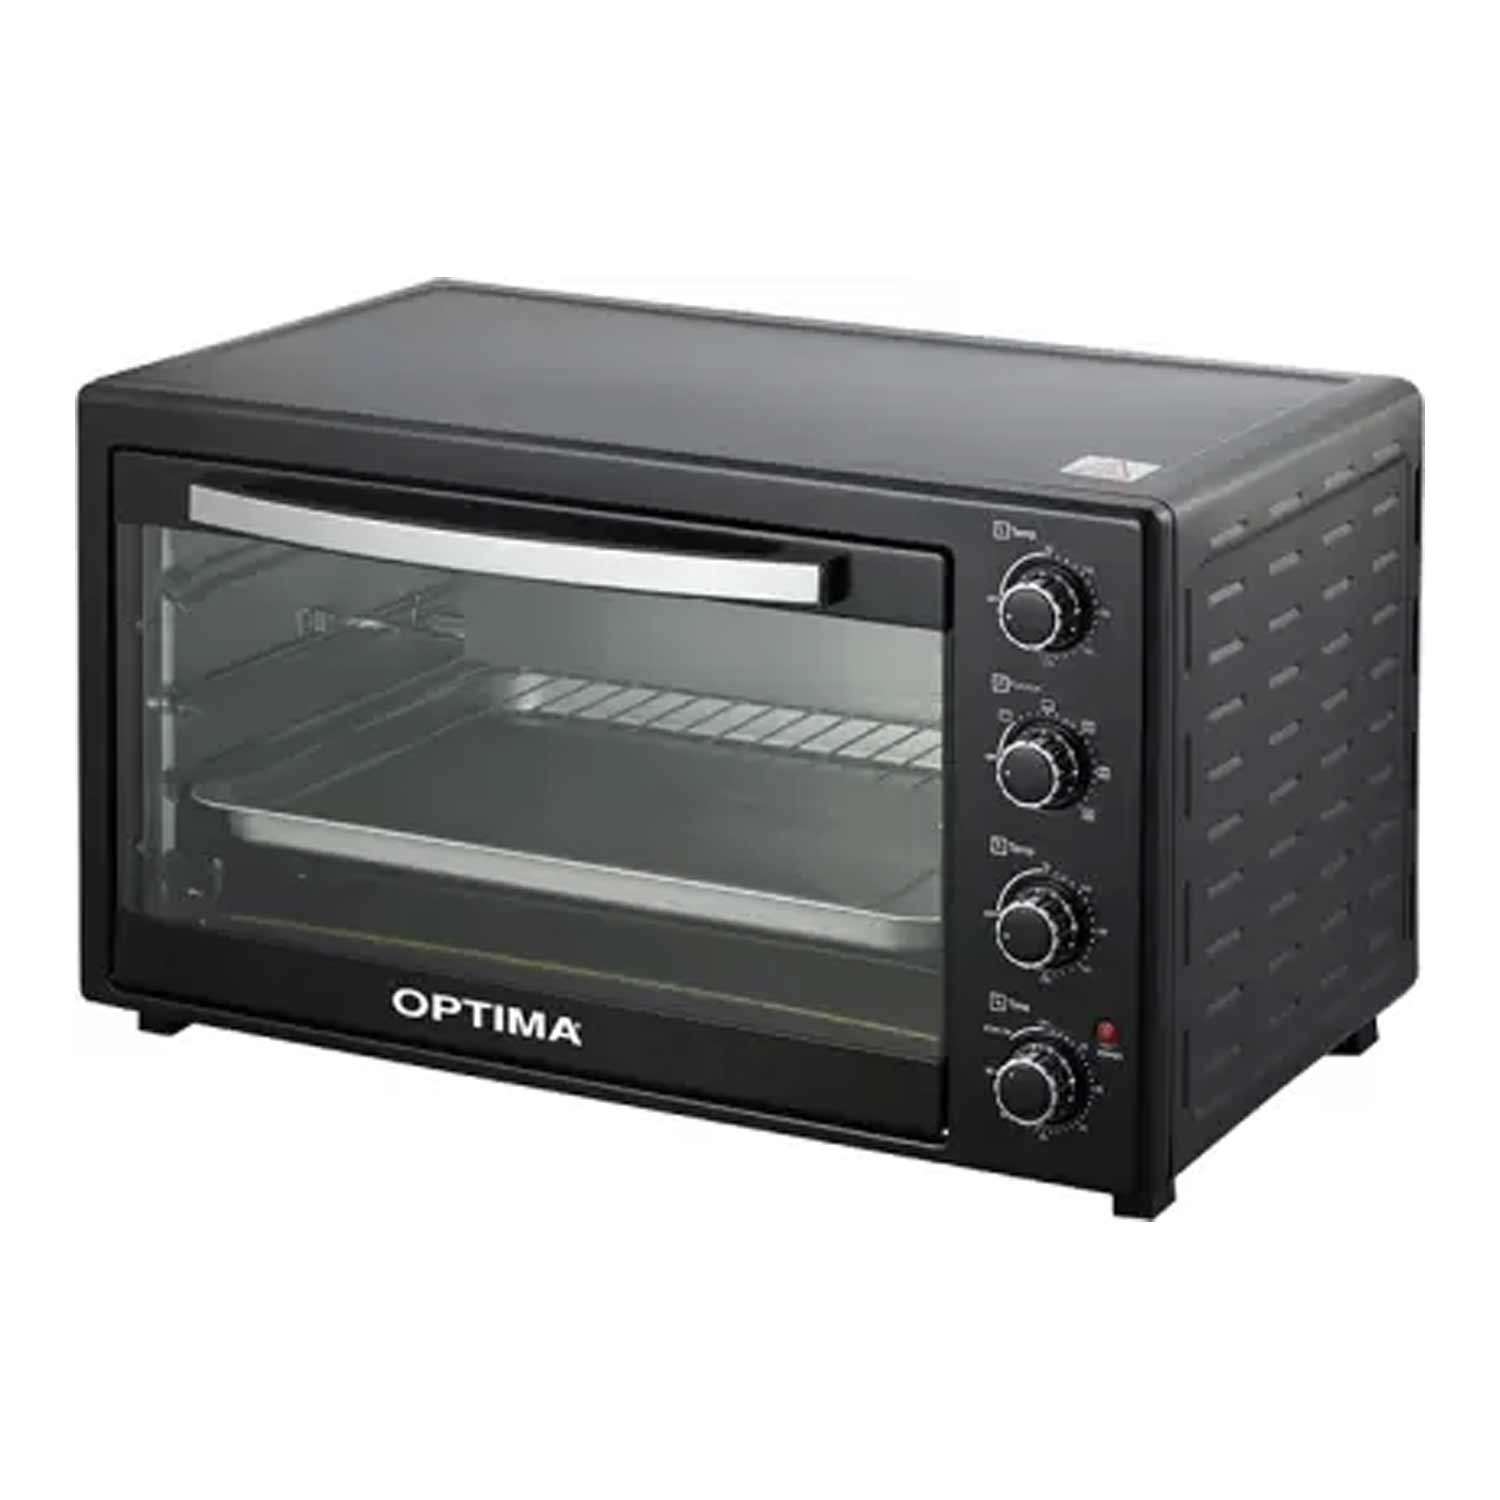 Optima 60-Litre OT 600 OVEN TOASTER Oven Toaster Grill (OTG)